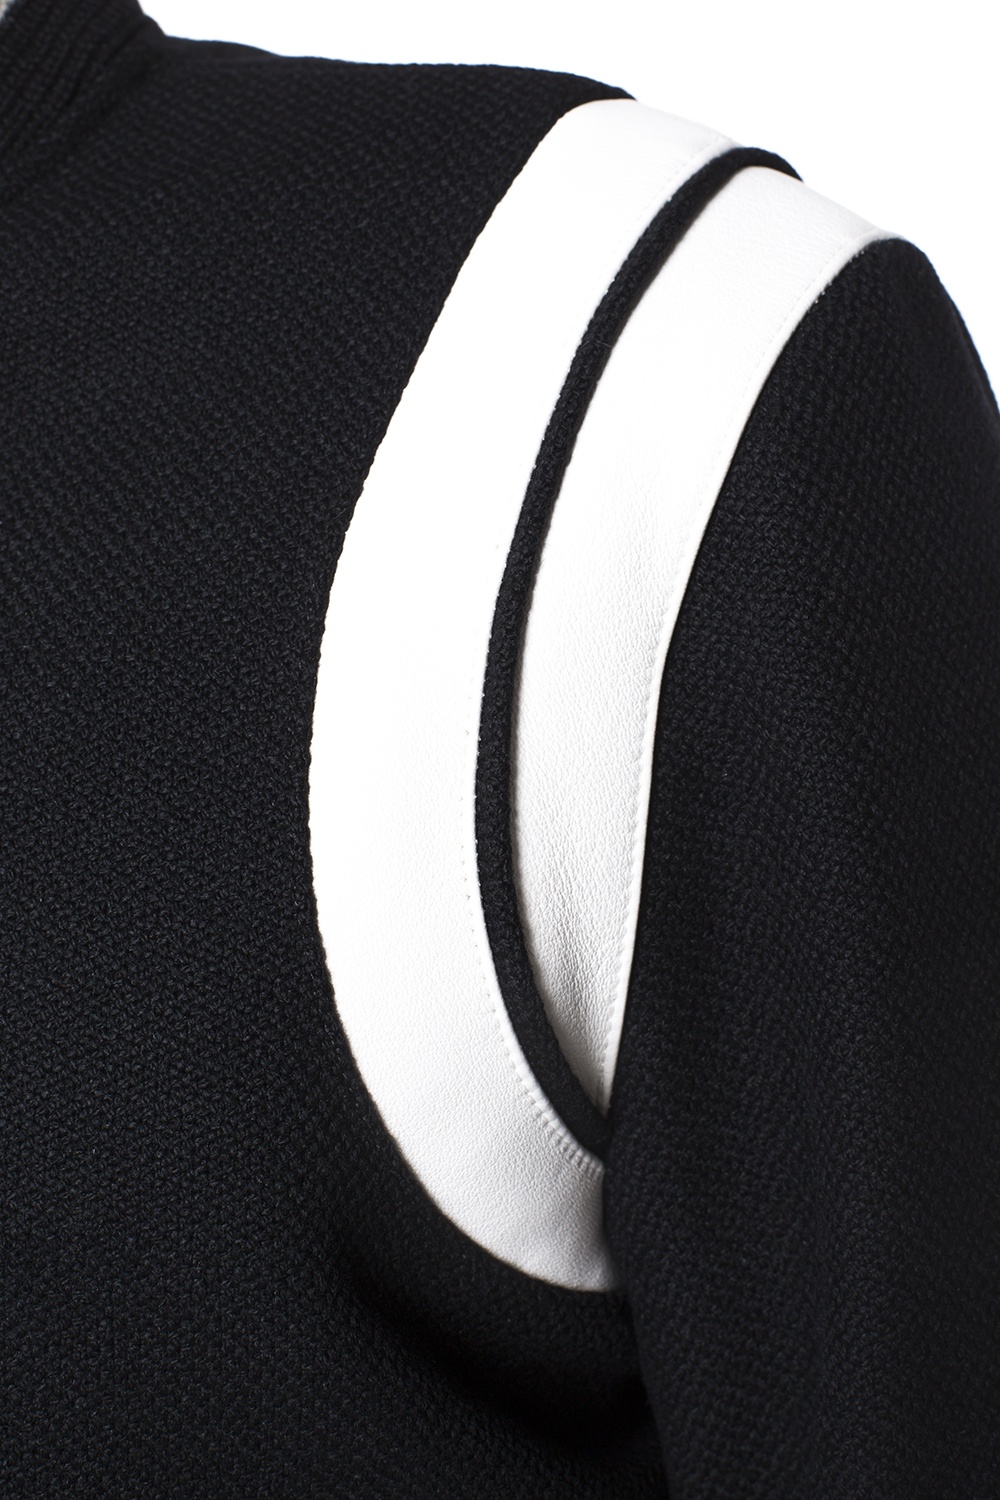 Saint Laurent Bomber jacket | Men's Clothing | Vitkac